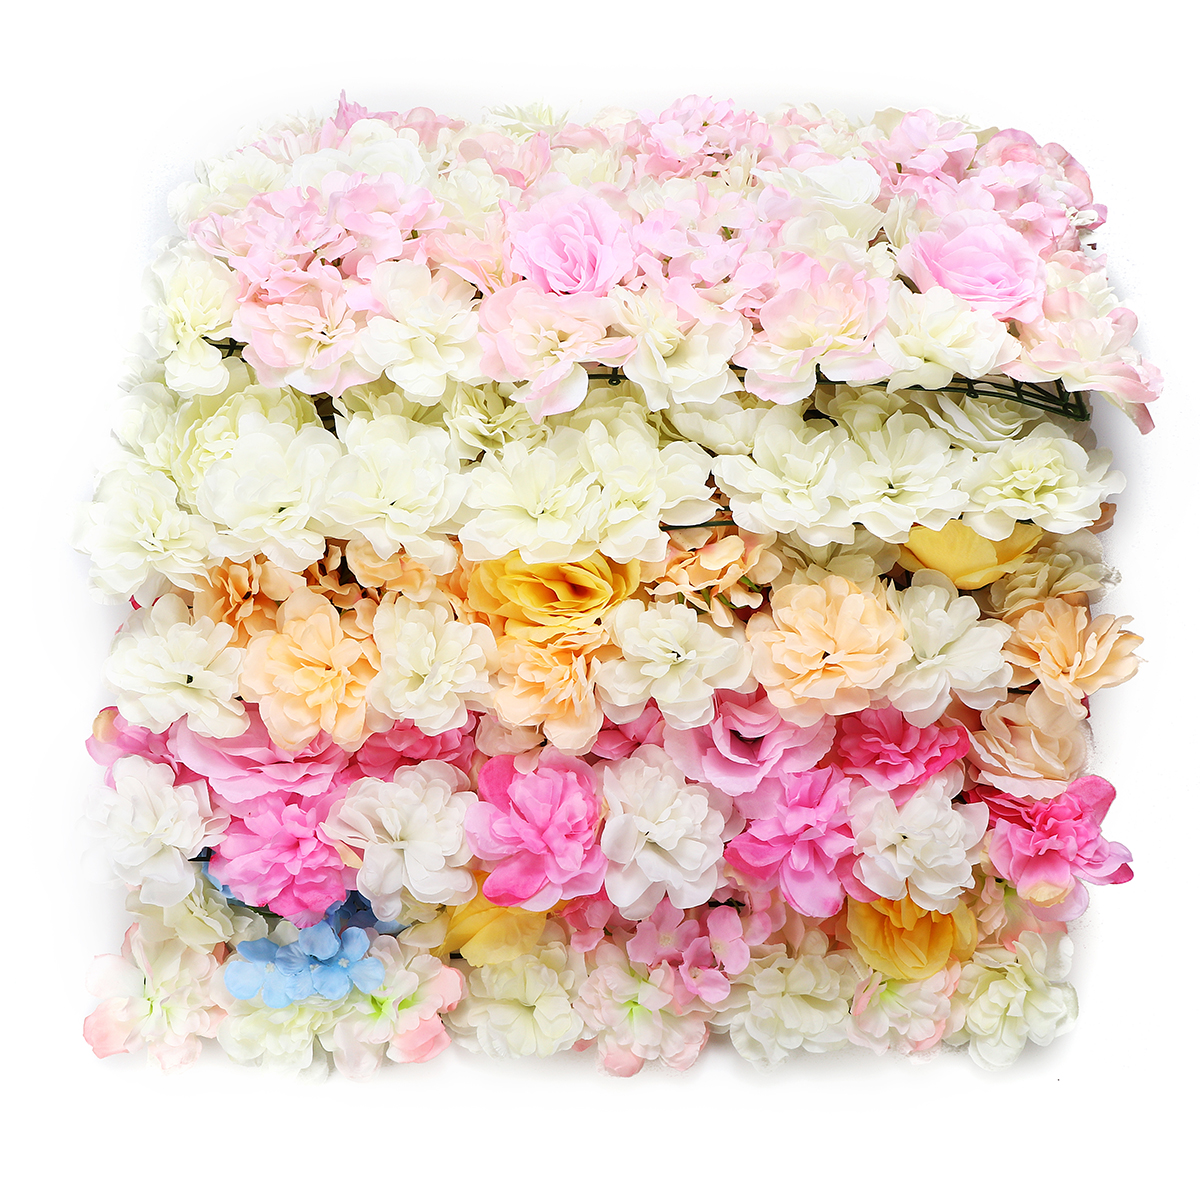 DIY-Artificia-Wedding-Rose-Flower-Panel-Backdrop-Wall-Road-Arch-Decorations-1632758-4